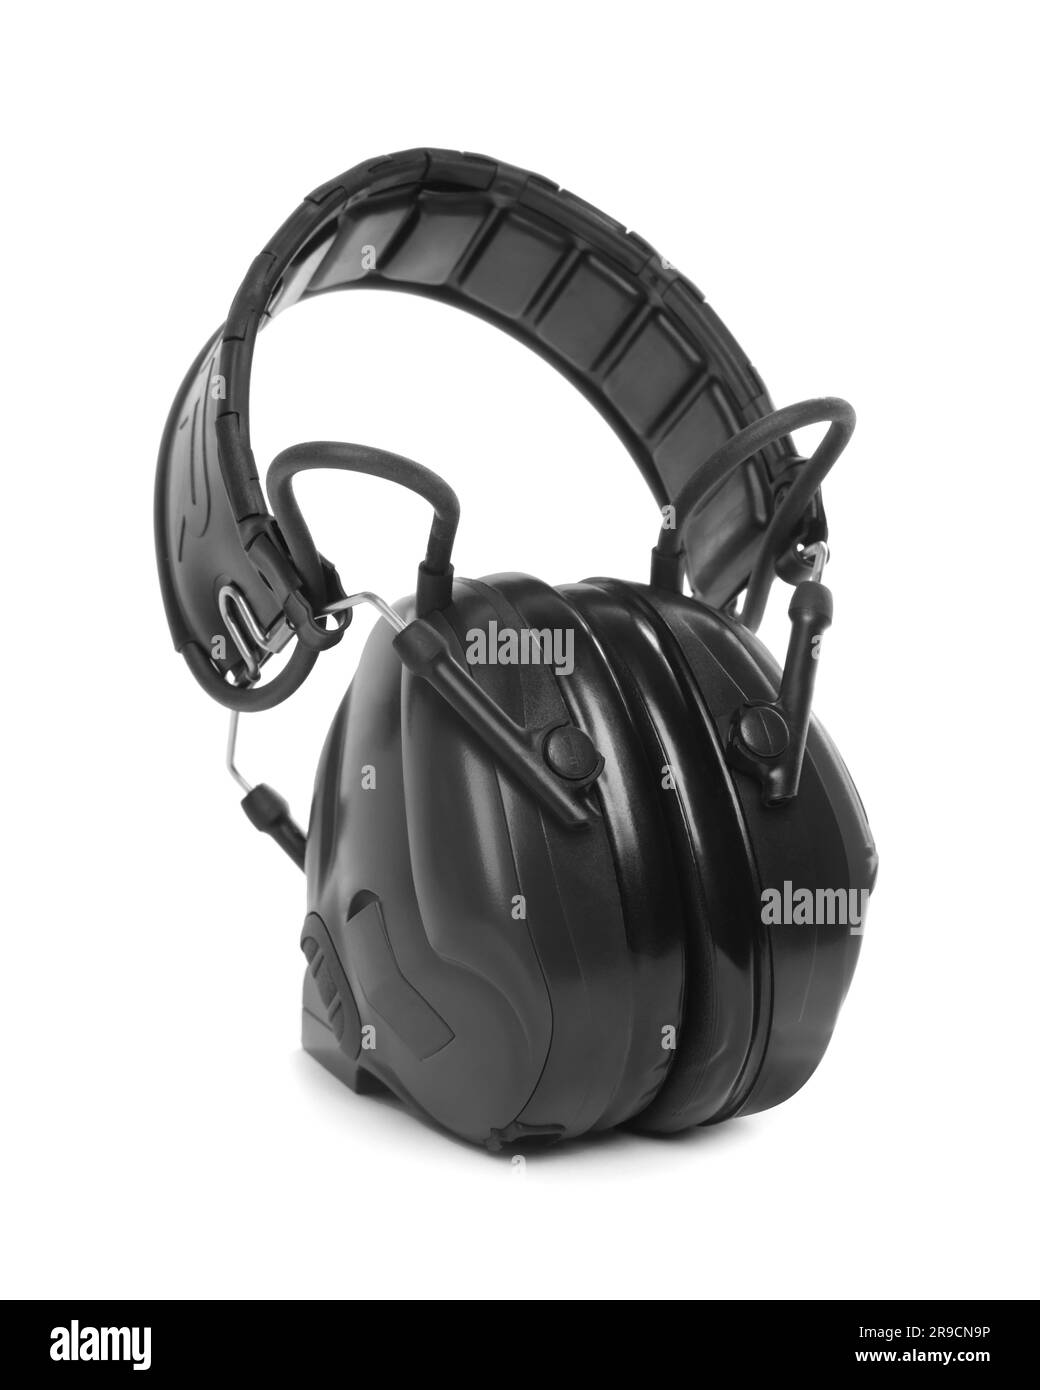 Tactical headphones on white background. Military training equipment Stock Photo